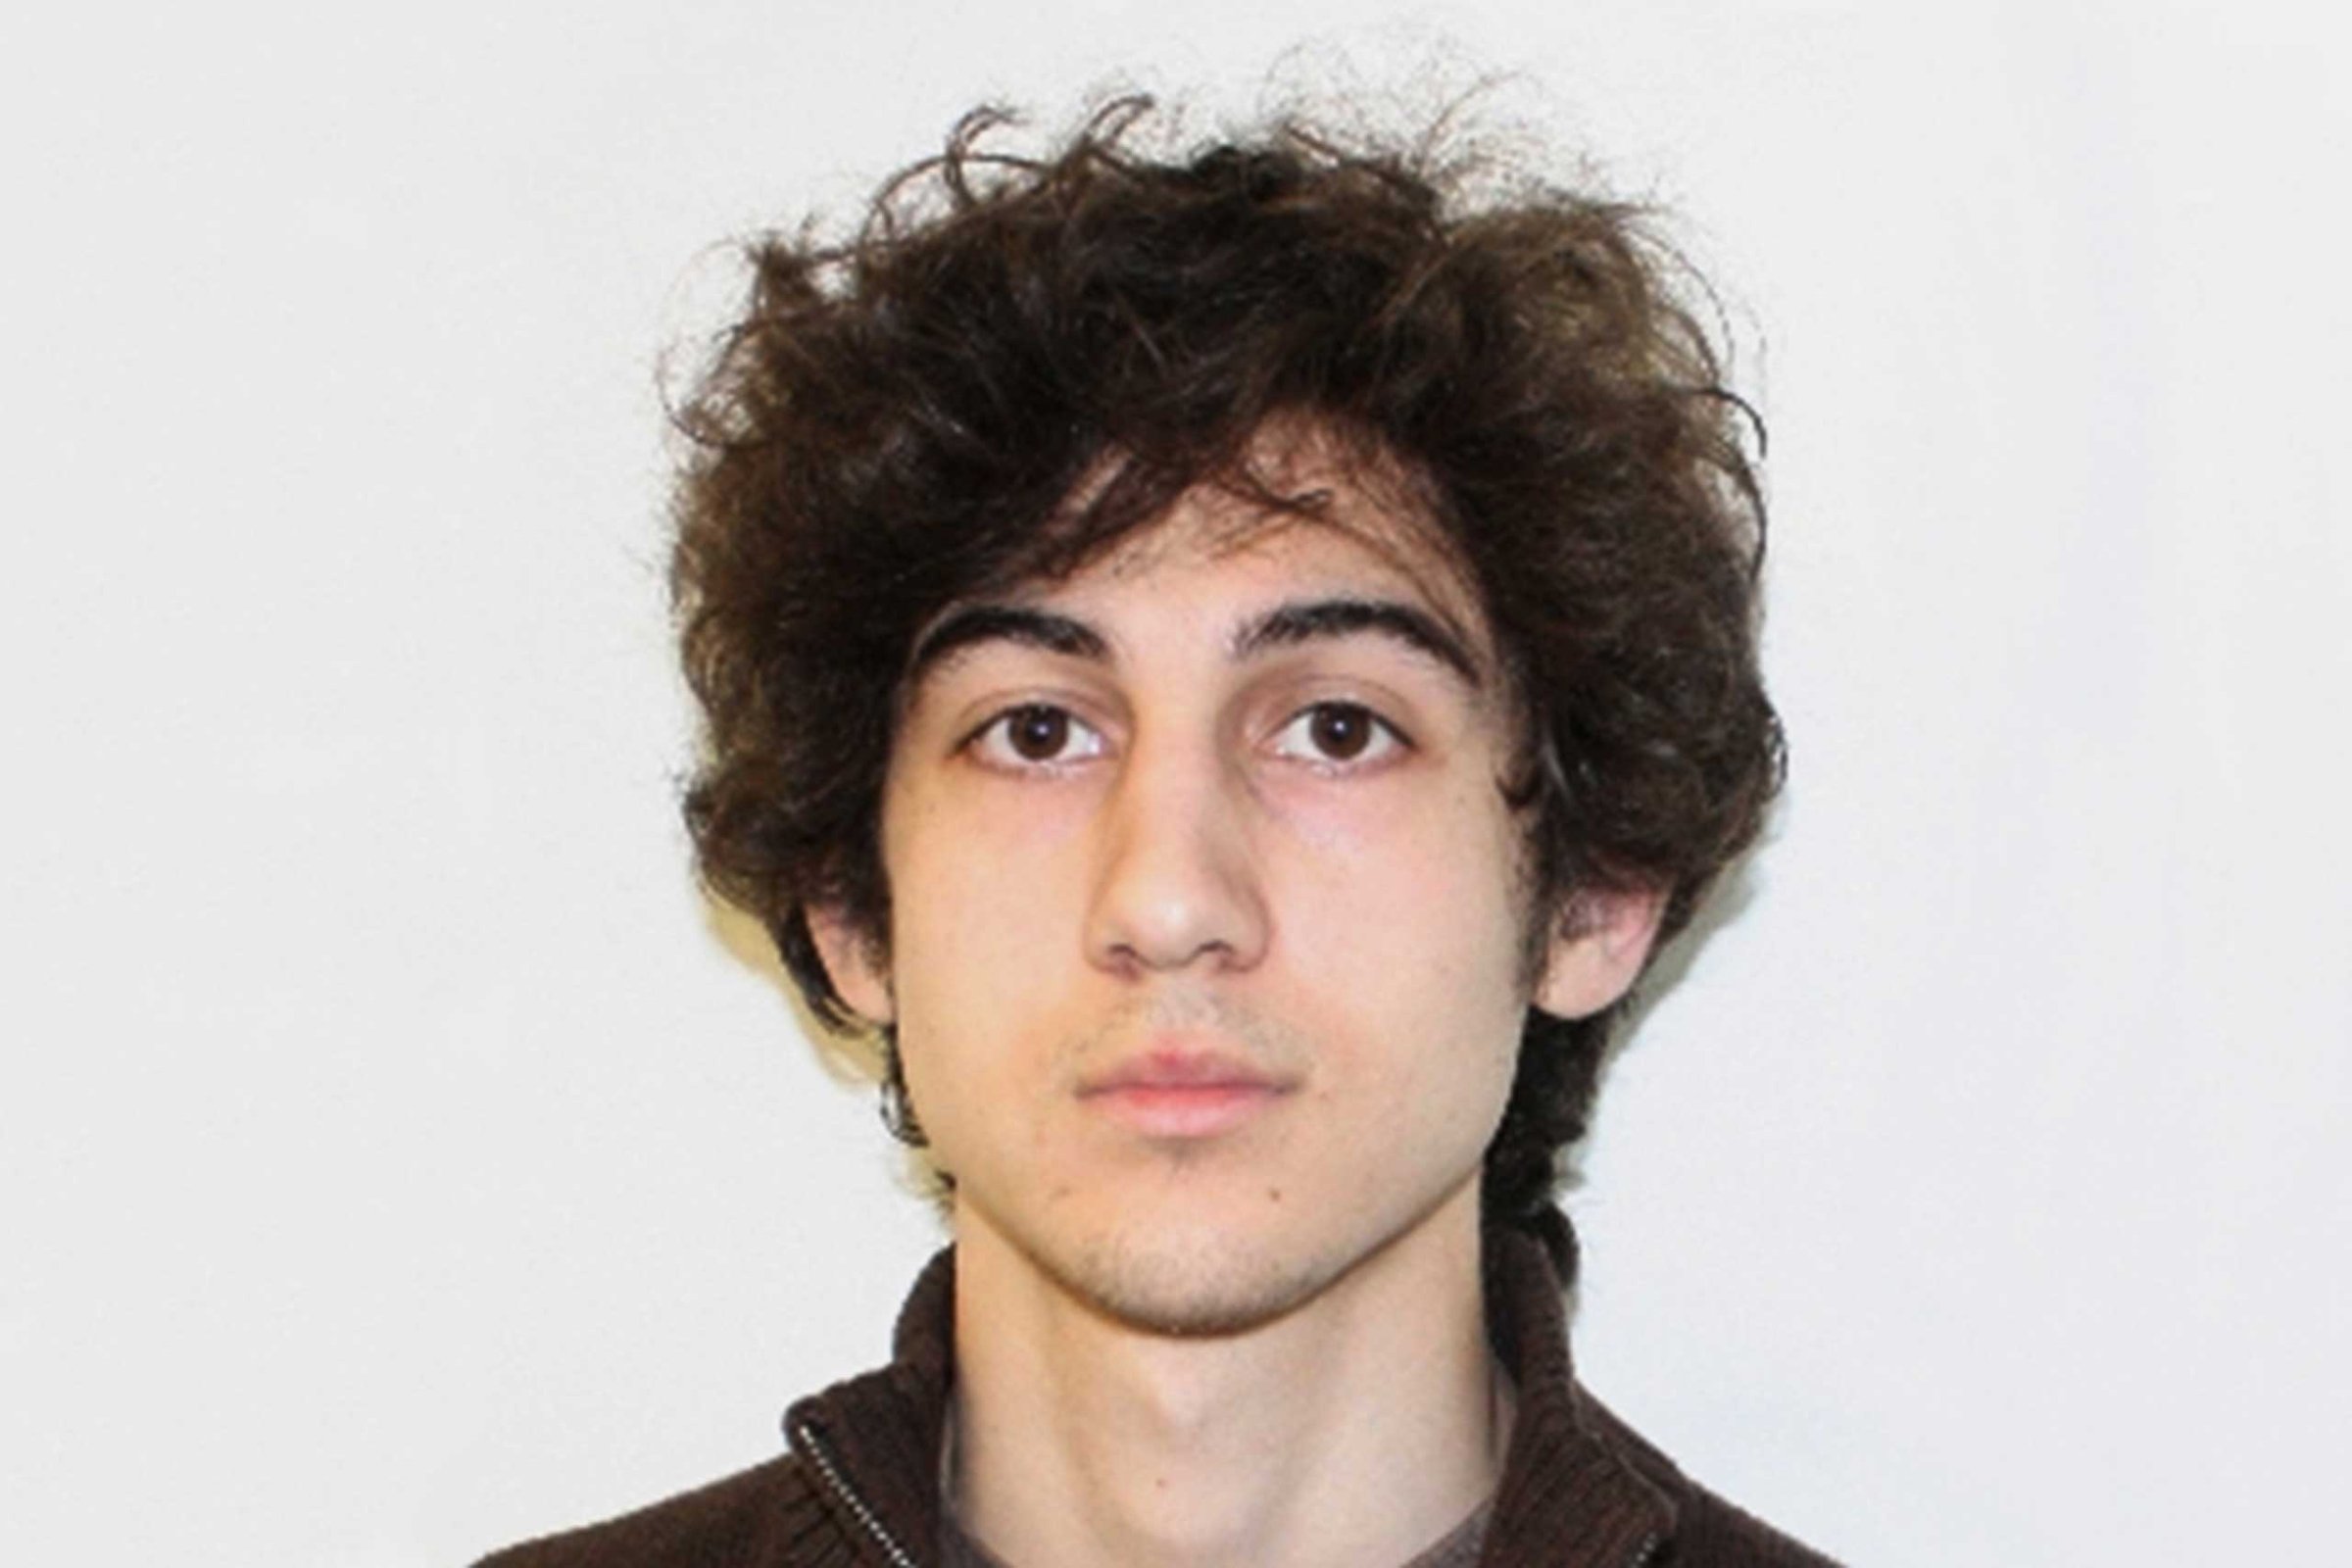 HORIZONTAL Dzhokhar Tsarnaev, a suspect in the Boston Marathon bombing, photo released on April 19, 2013.